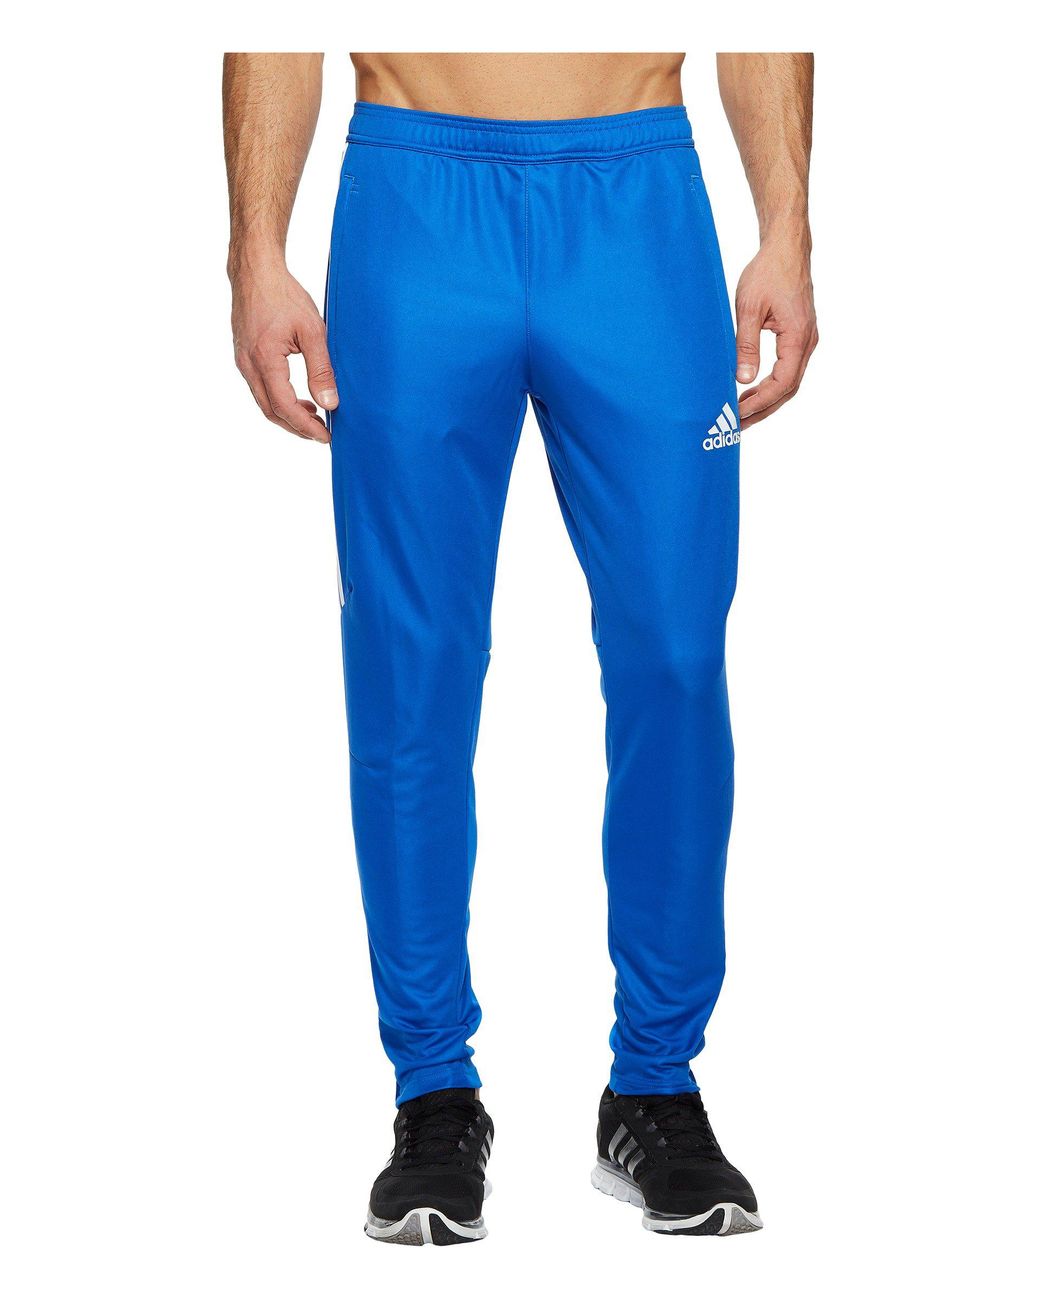 Adidas Pants Tiro17 Men's Soccer Apparel from Gaponez Sport Gear